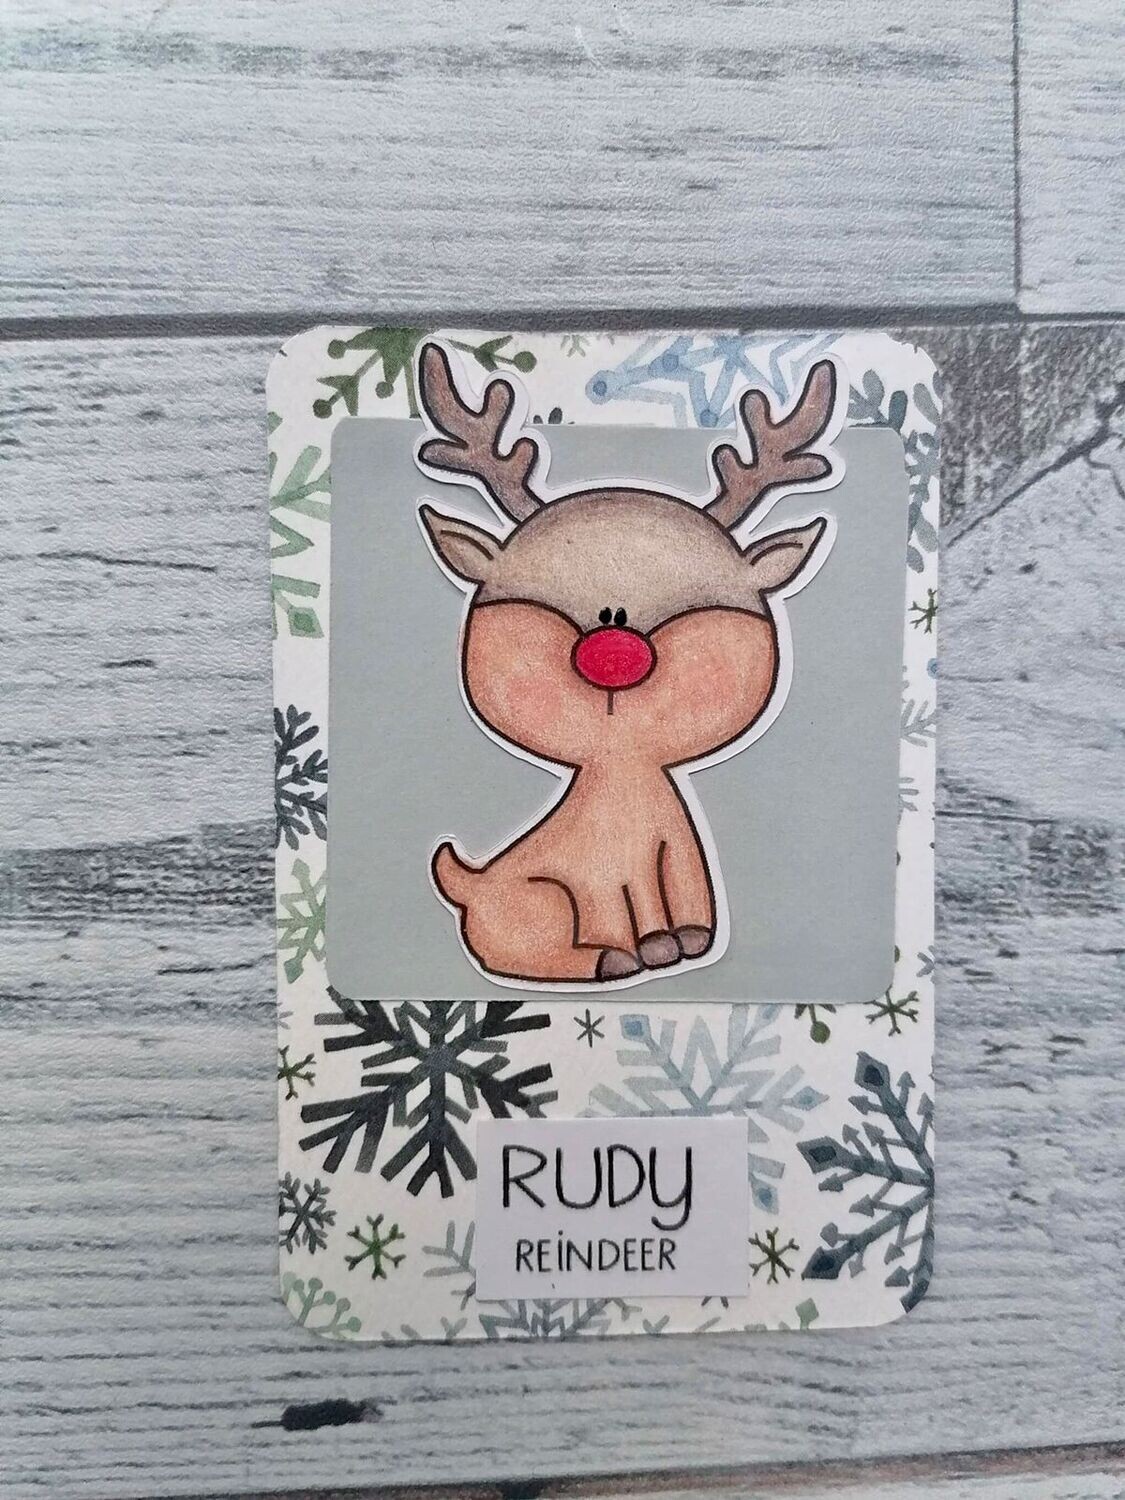 Rudy Reindeer